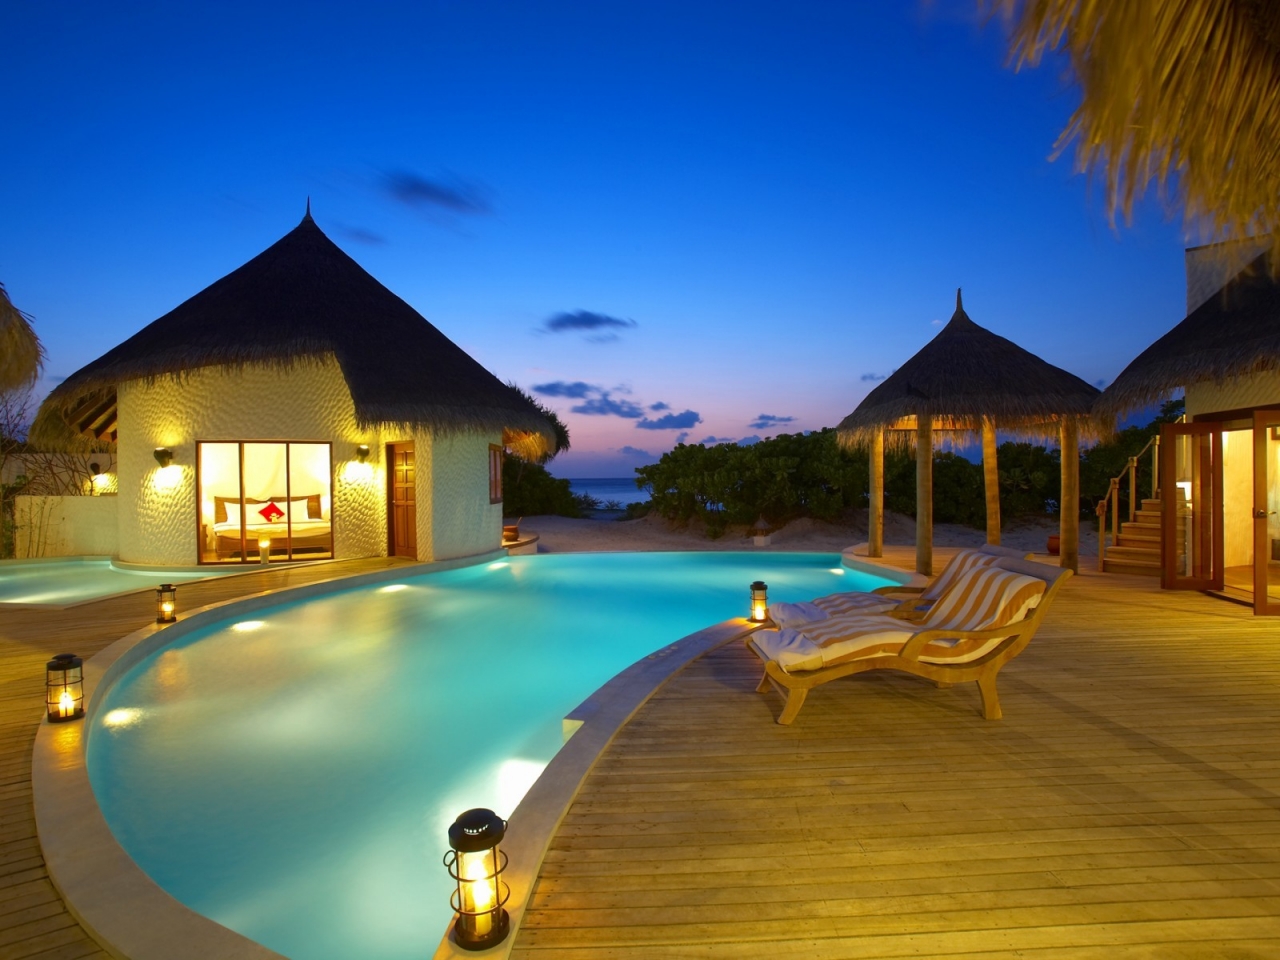 Maldives 5 Star Resort for 1280 x 960 resolution